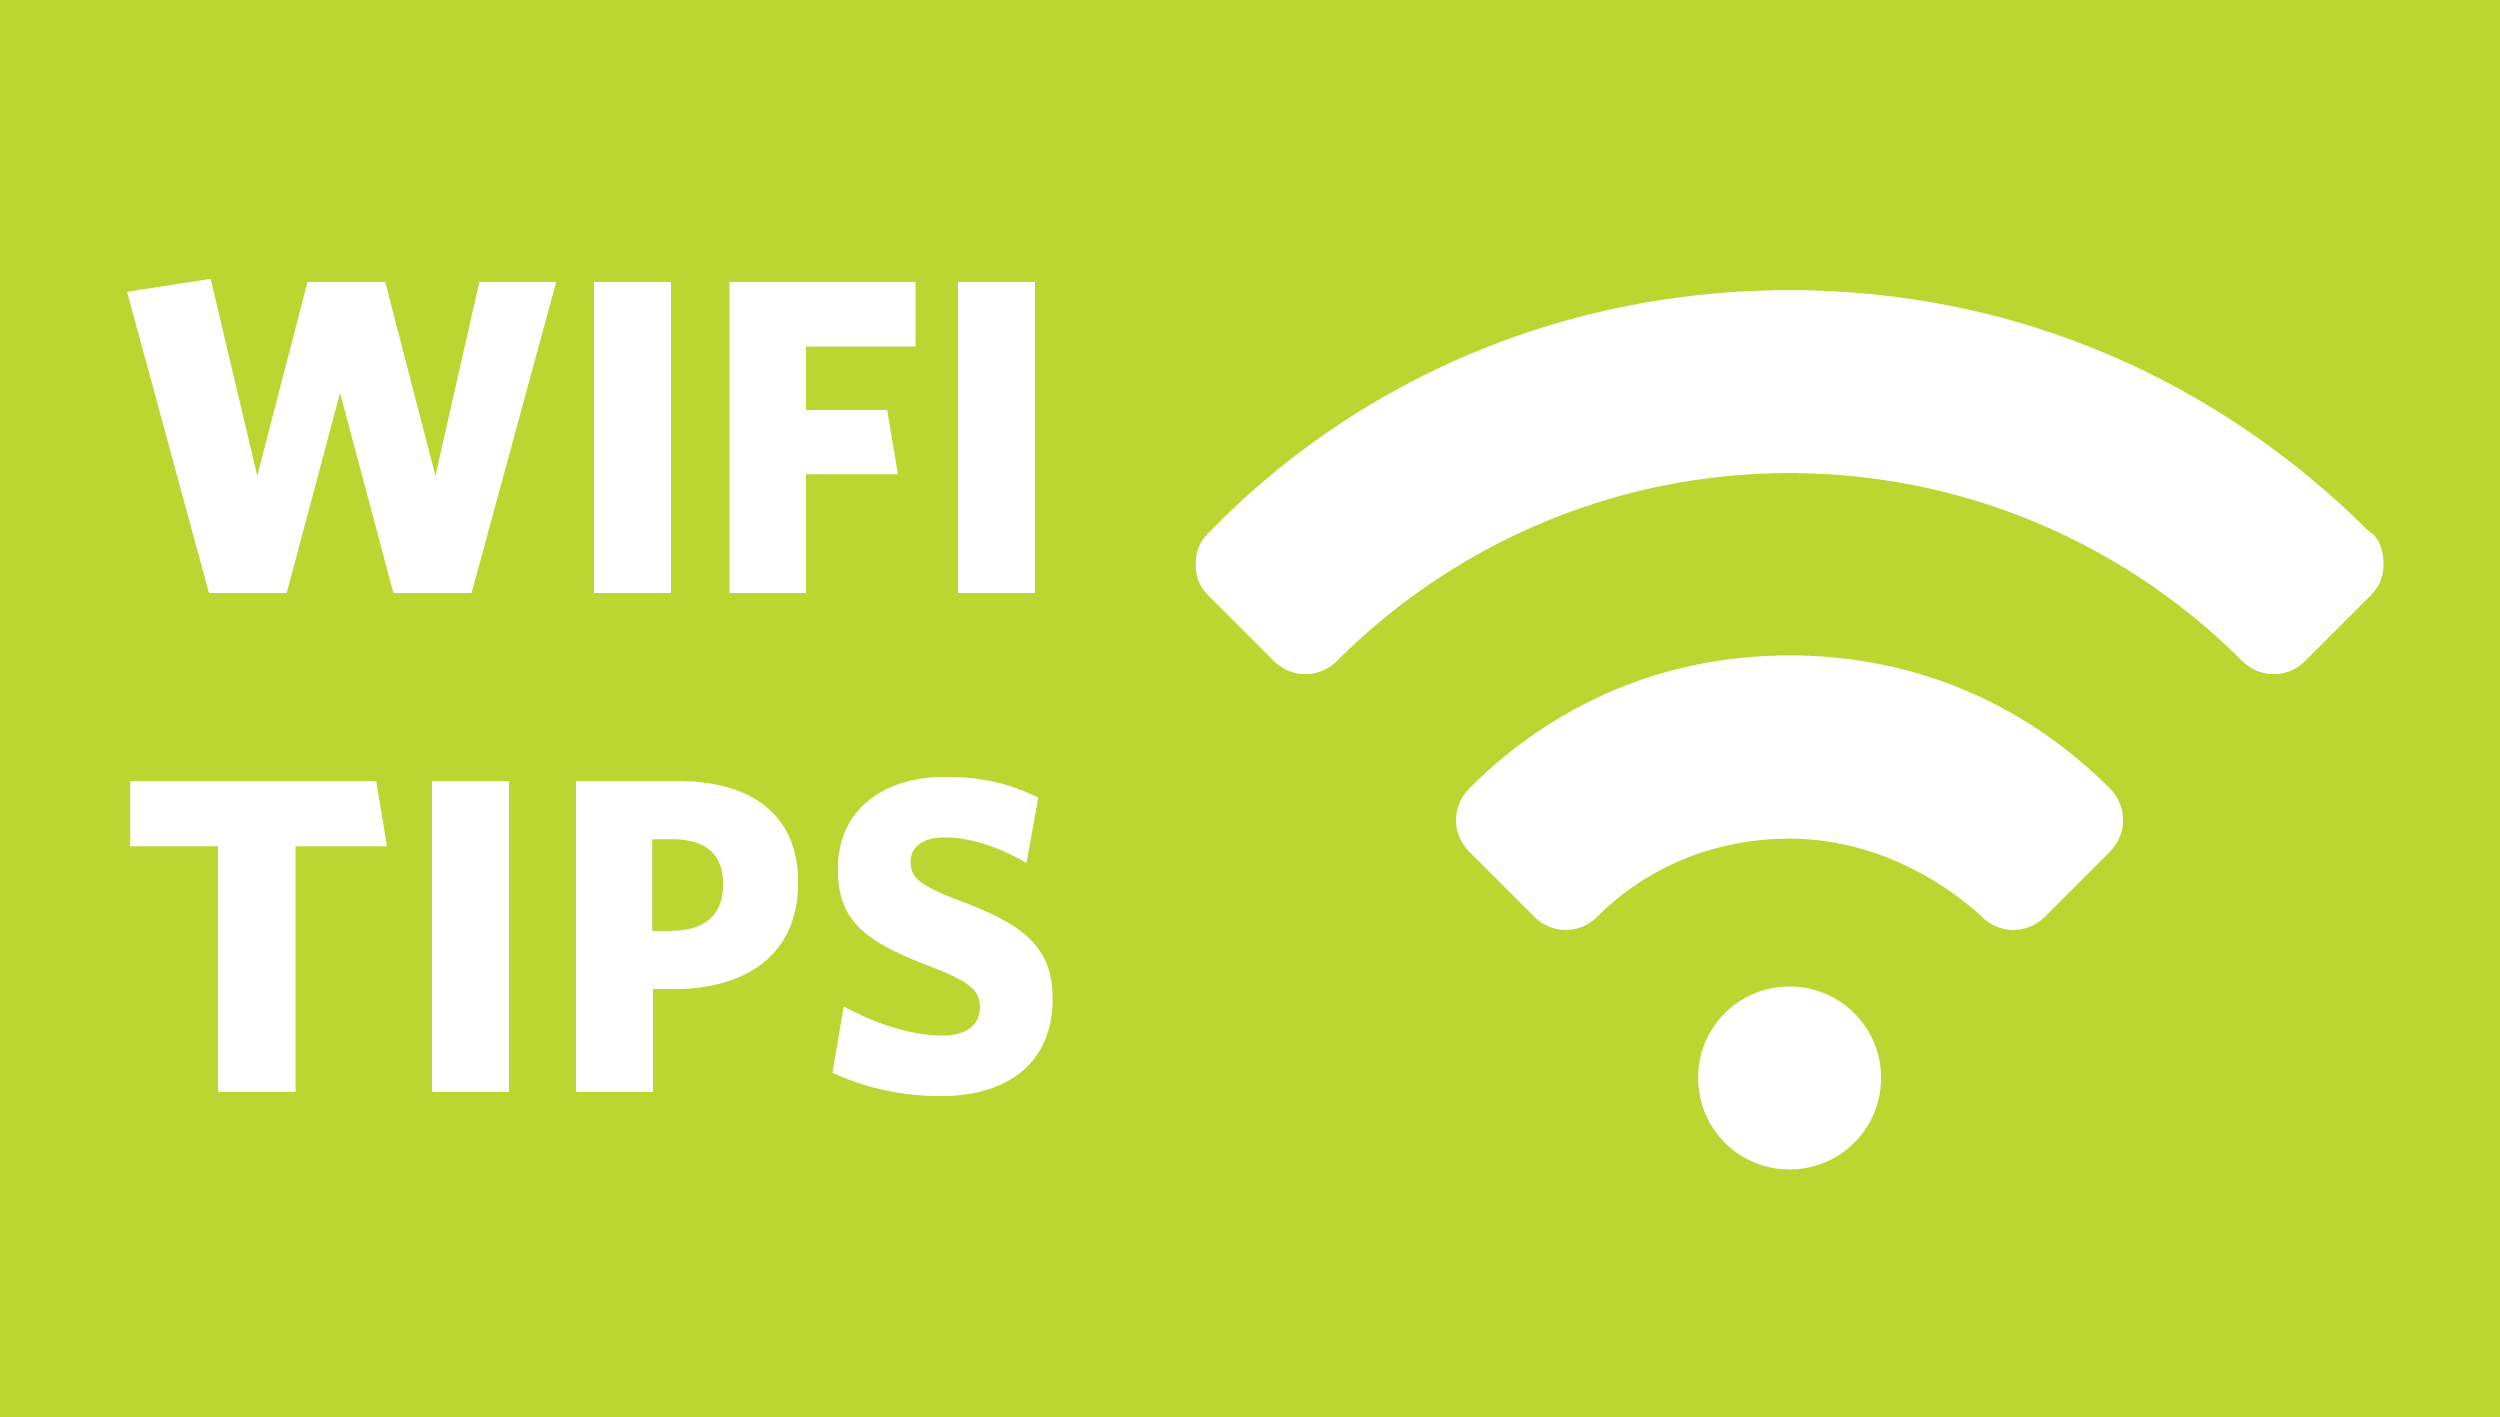 WIFI Tips Header Image